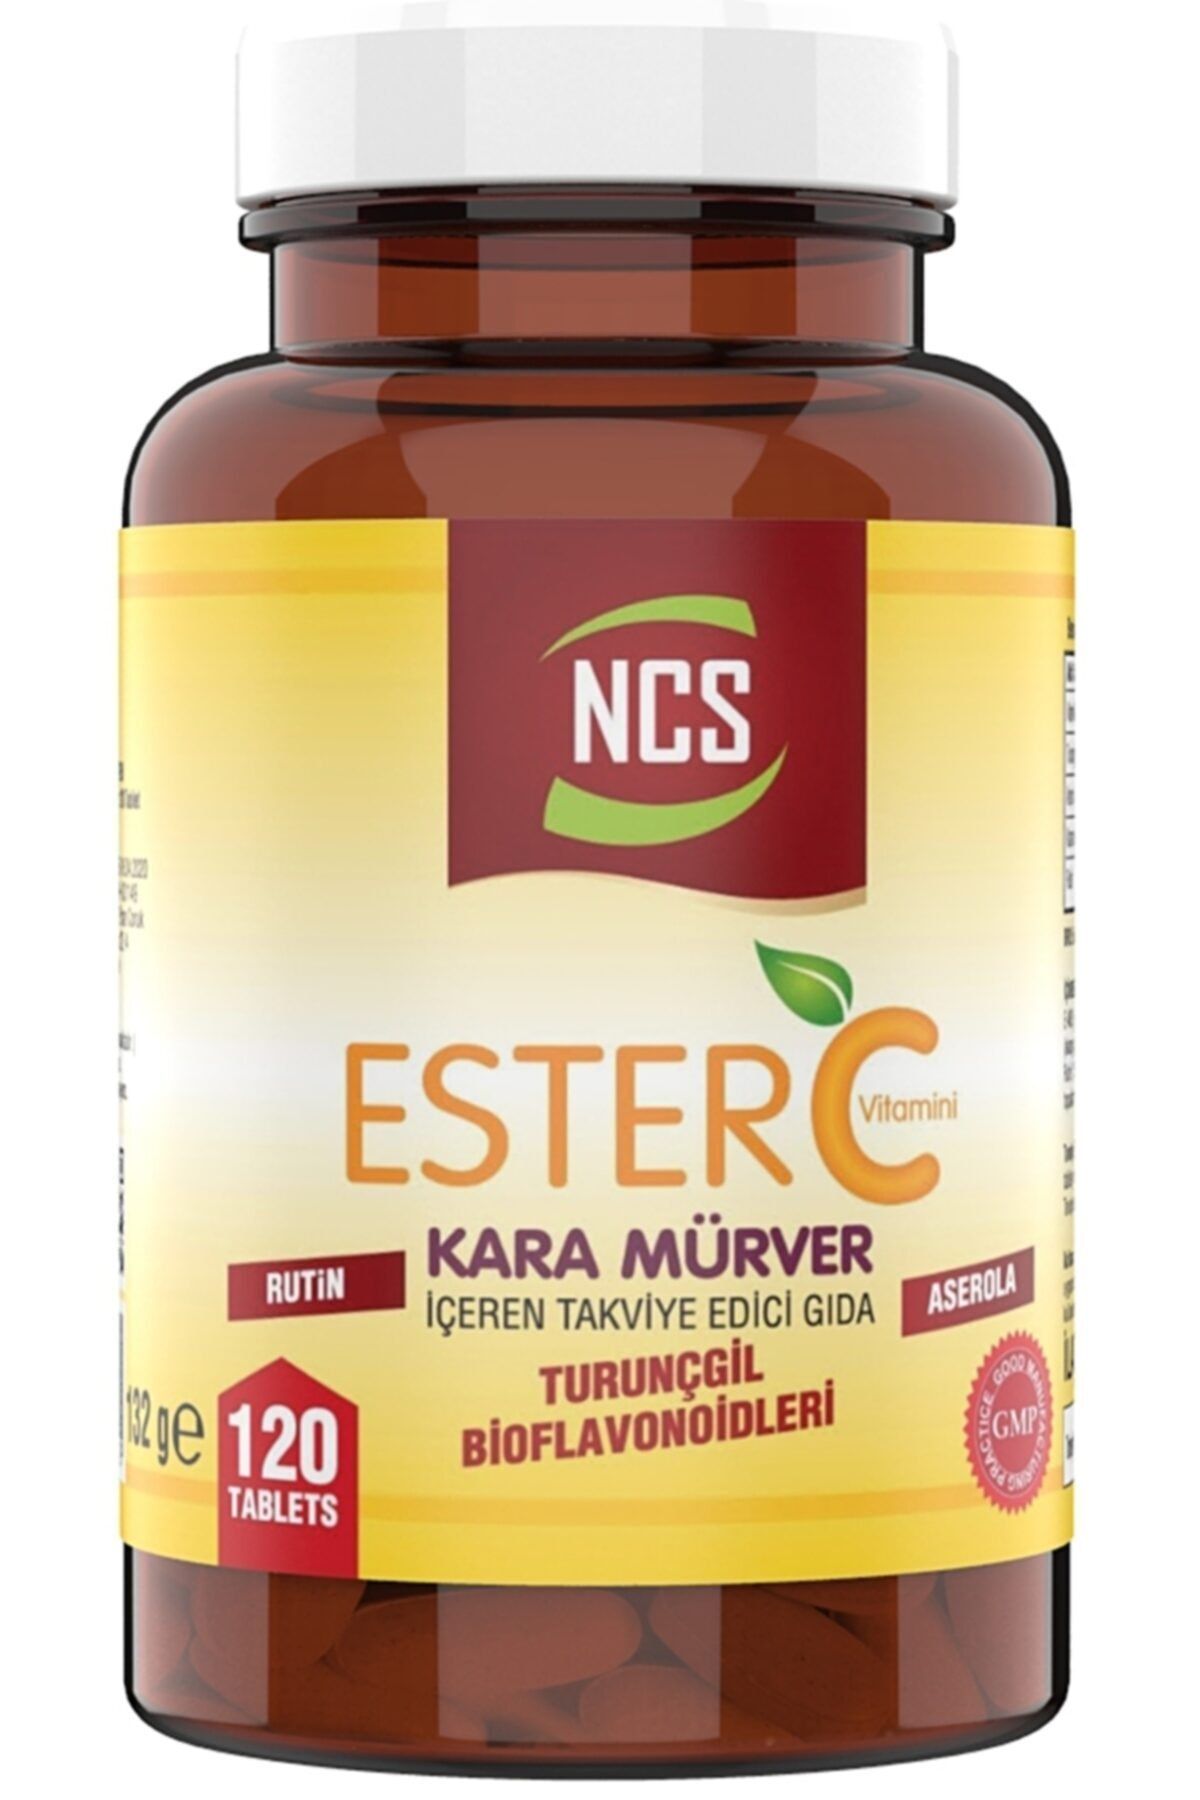 Ncs Ester C Vitamini 1000 mg Kara Mürver 120 Tablet Vitamin C